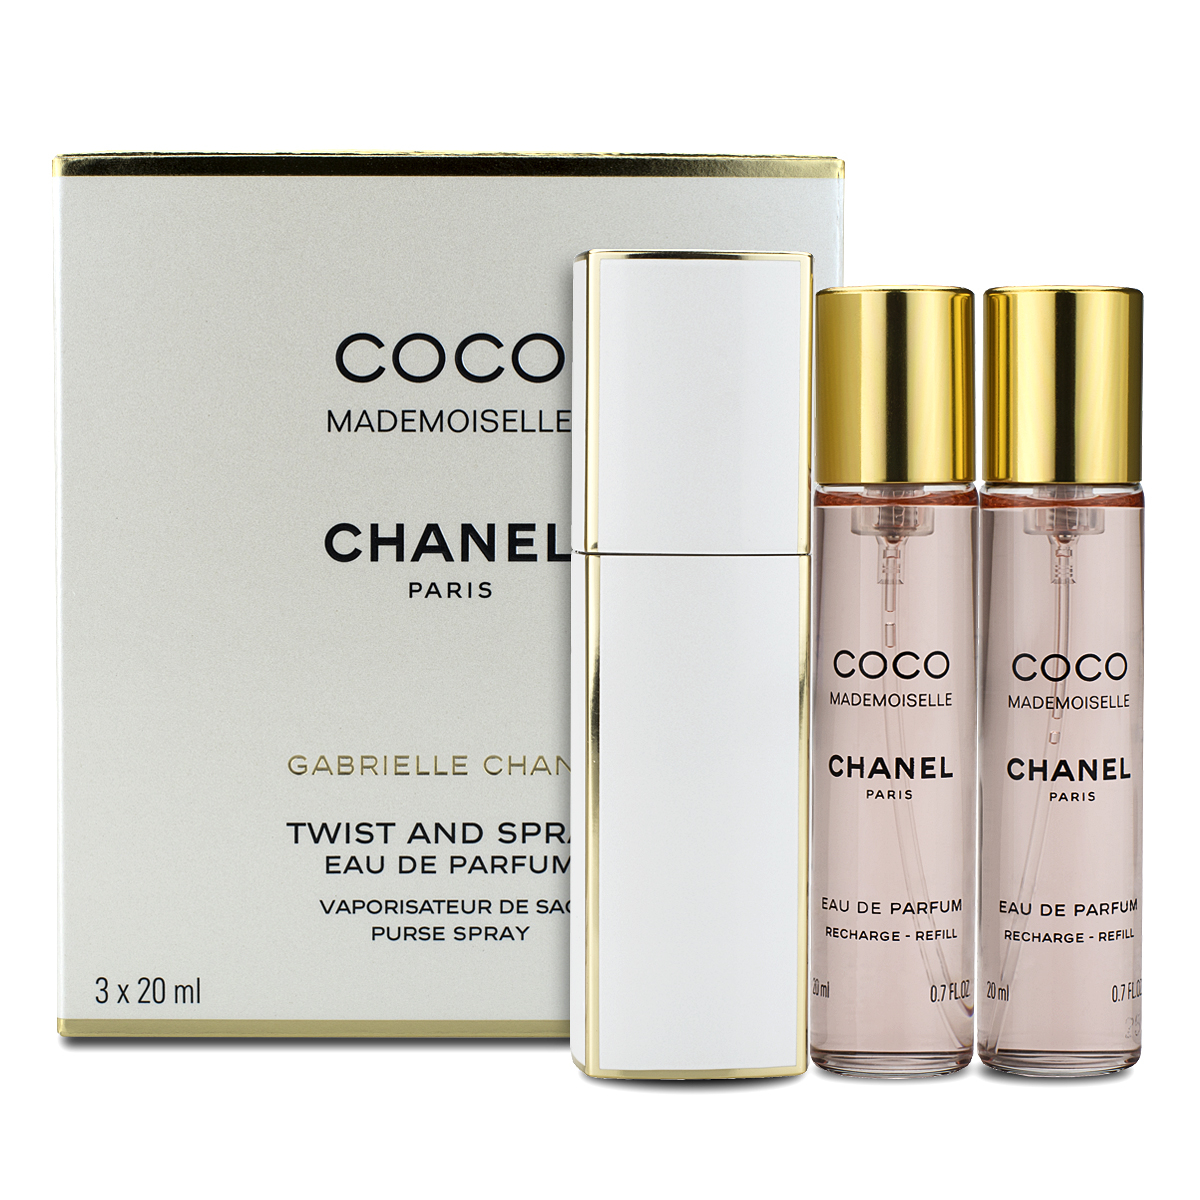 Chanel Coco Mademoiselle Eau de Parfum Twist & Spray 20ml + 2 X 20ml Refills